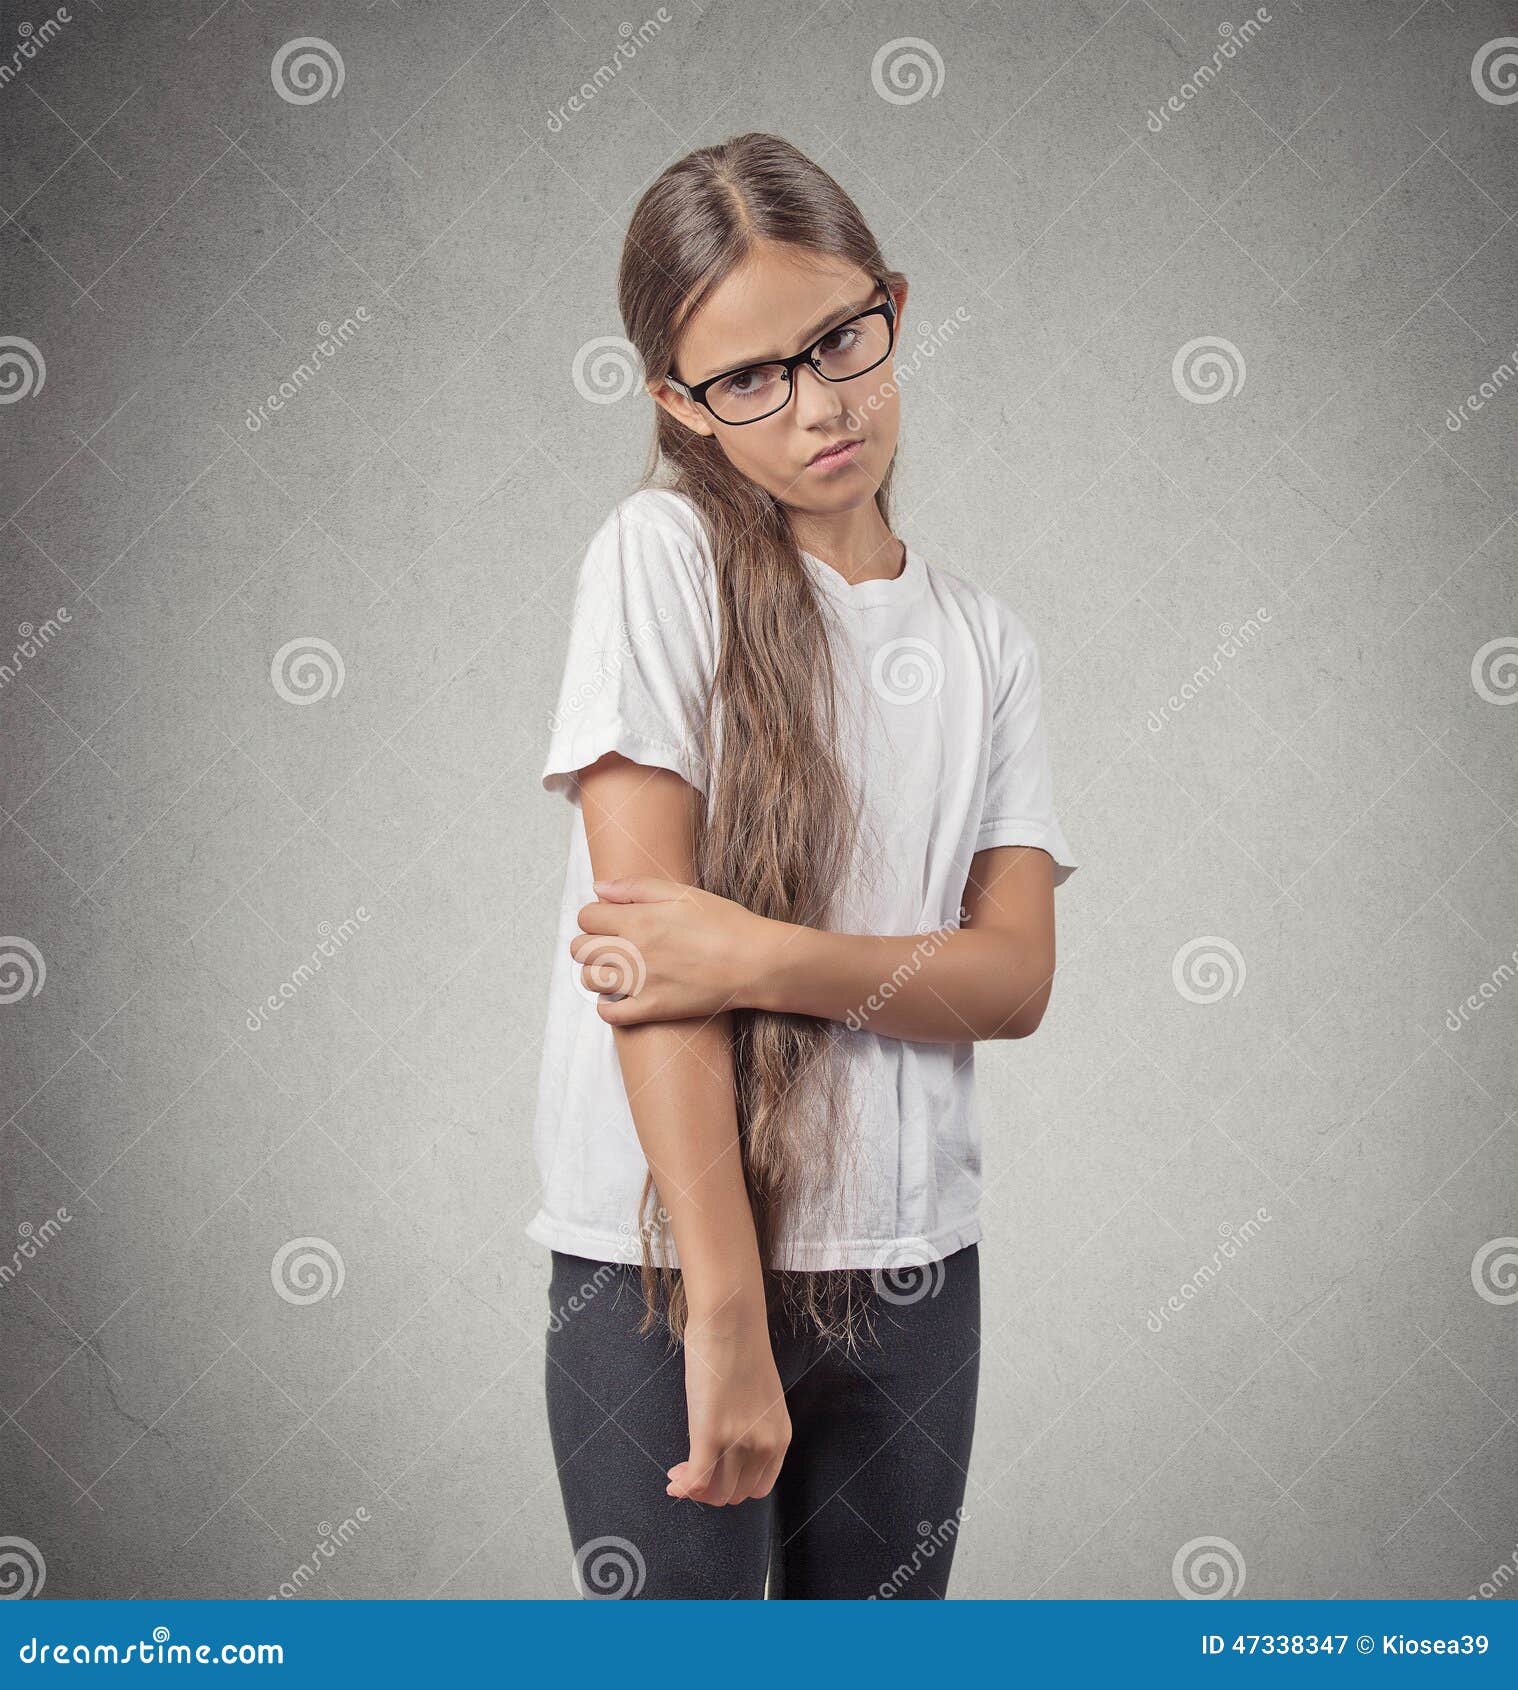 Shy Teenager Girl Stock Image Image Of Background Closeu